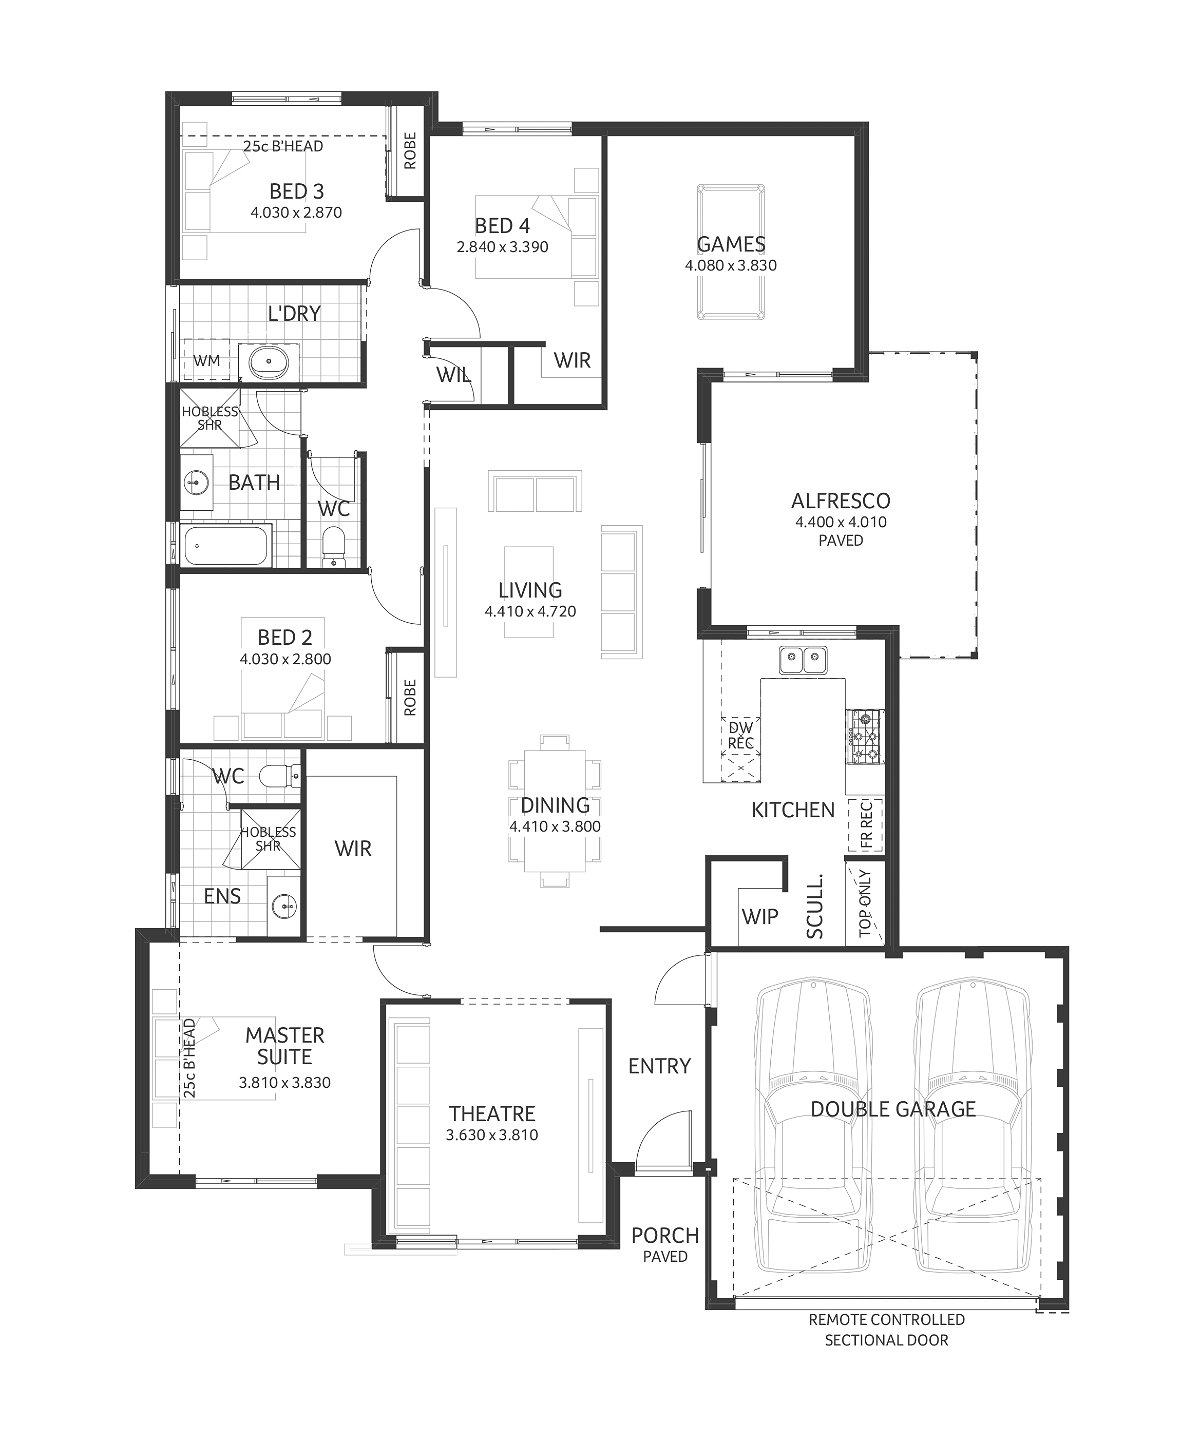 Plunkett Homes - Jolimont | Lifestyle - Floorplan - Jolimont Lifestyle Marketing Plan Cropped Jpg 1